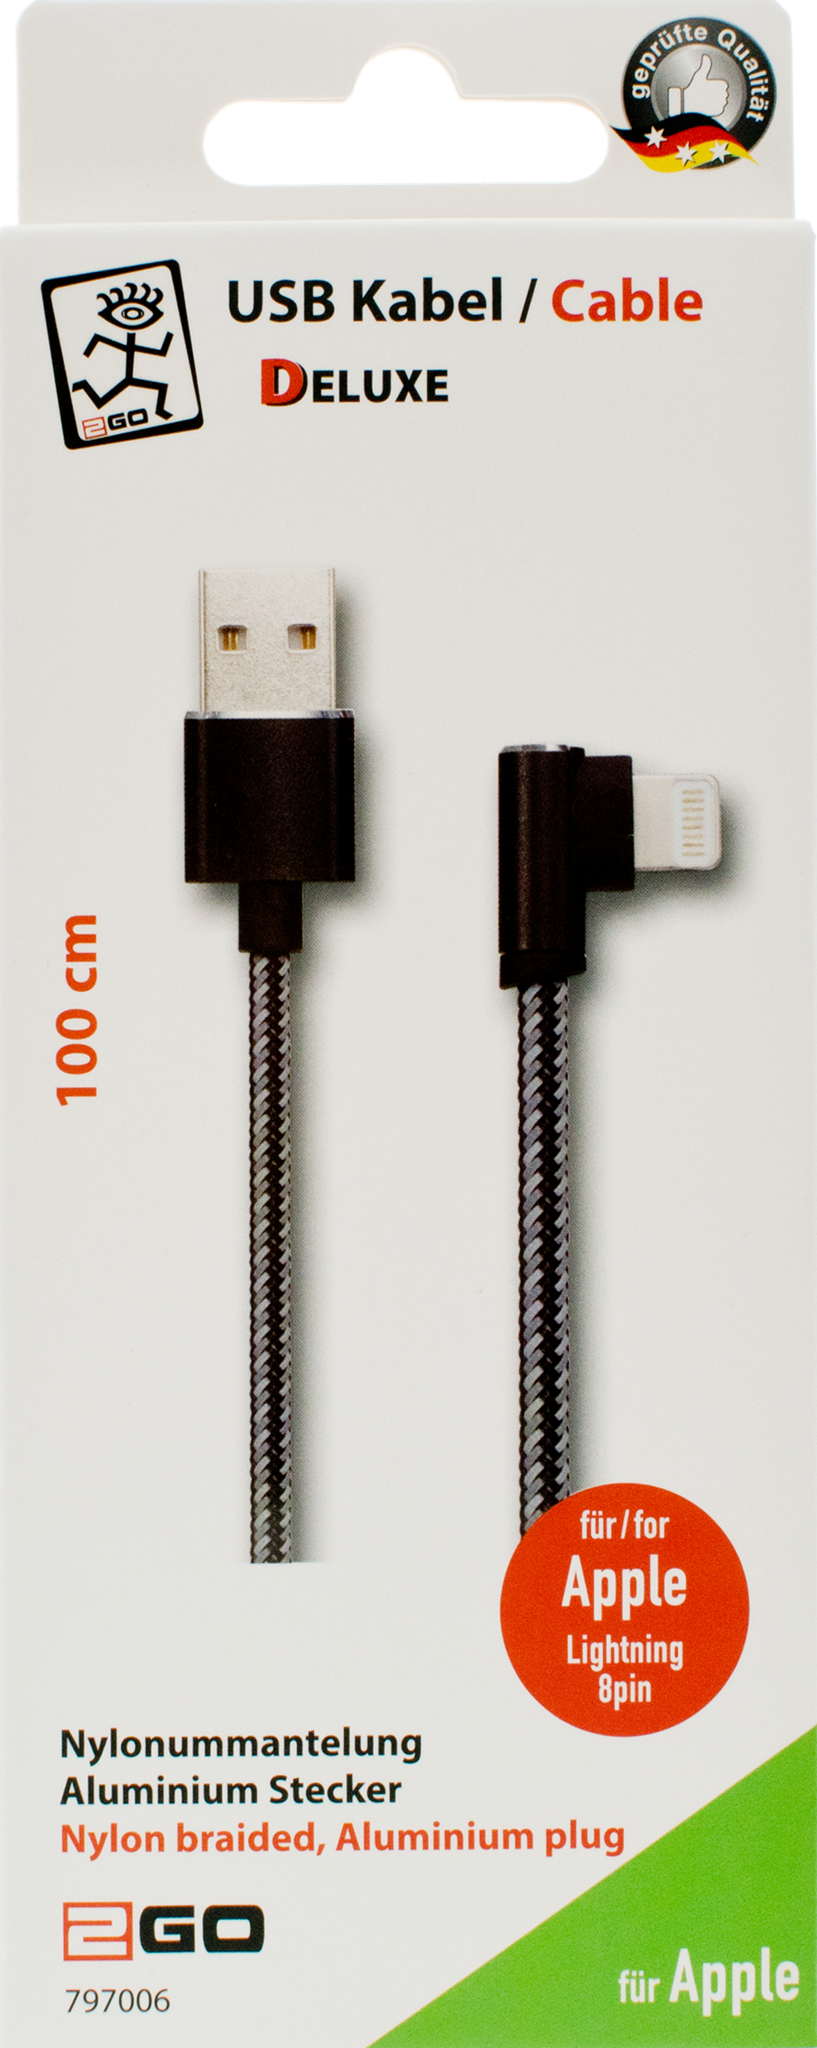 2GO Mobile.net - B2C -. USB Datenkabel Deluxe - Apple 8-Pin - schwarz